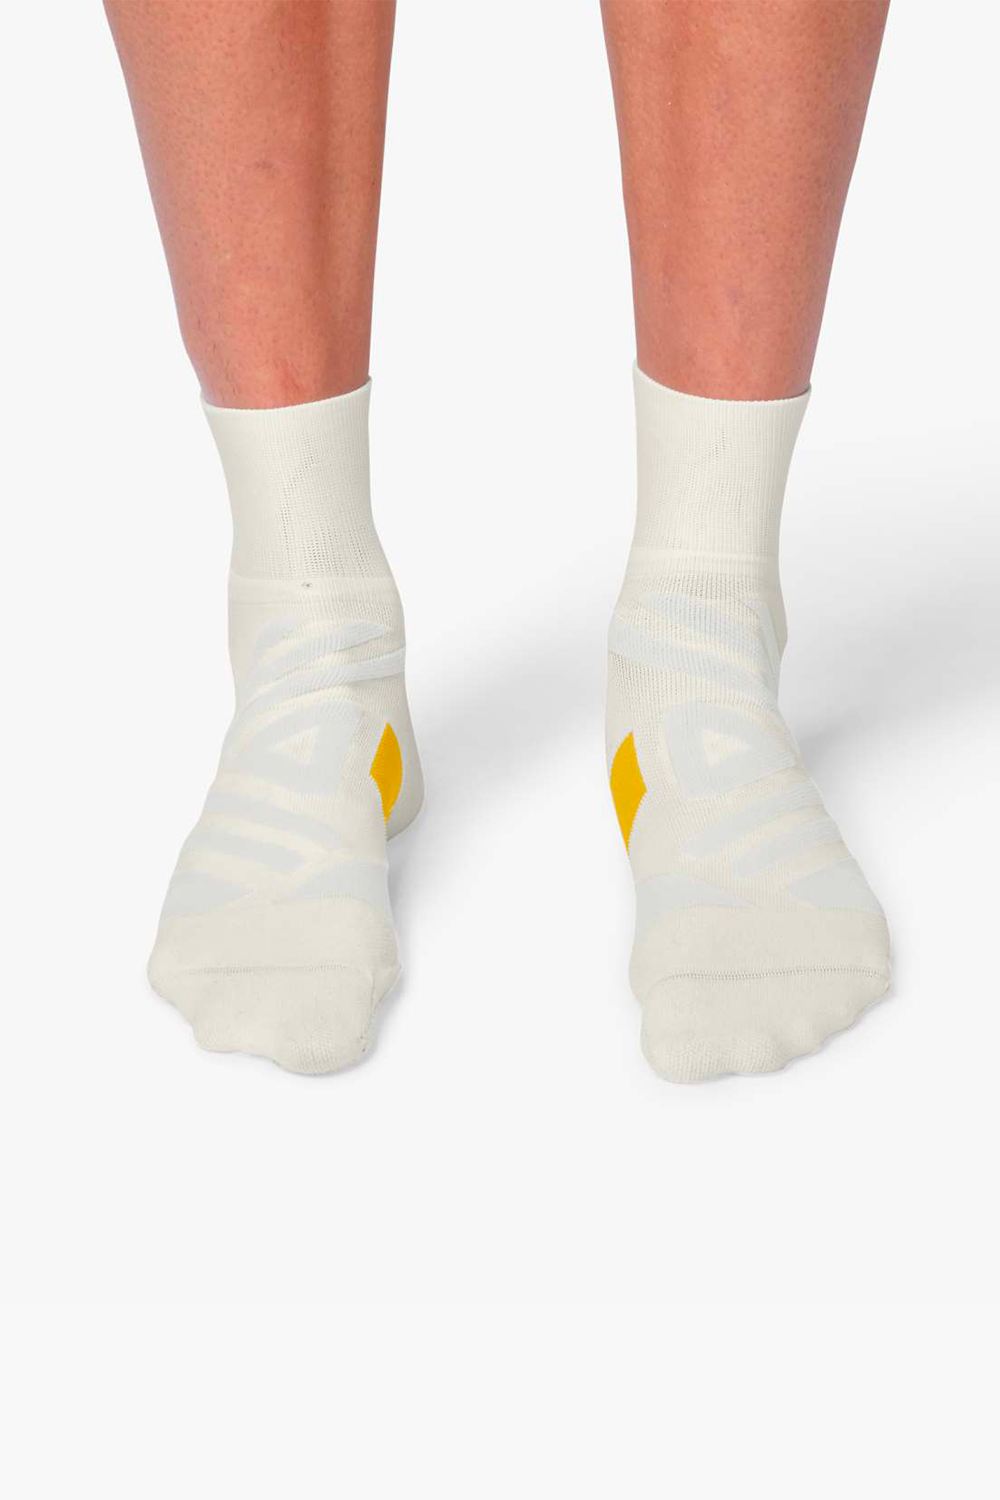 ON | Men's Mid Sock in White/Ice